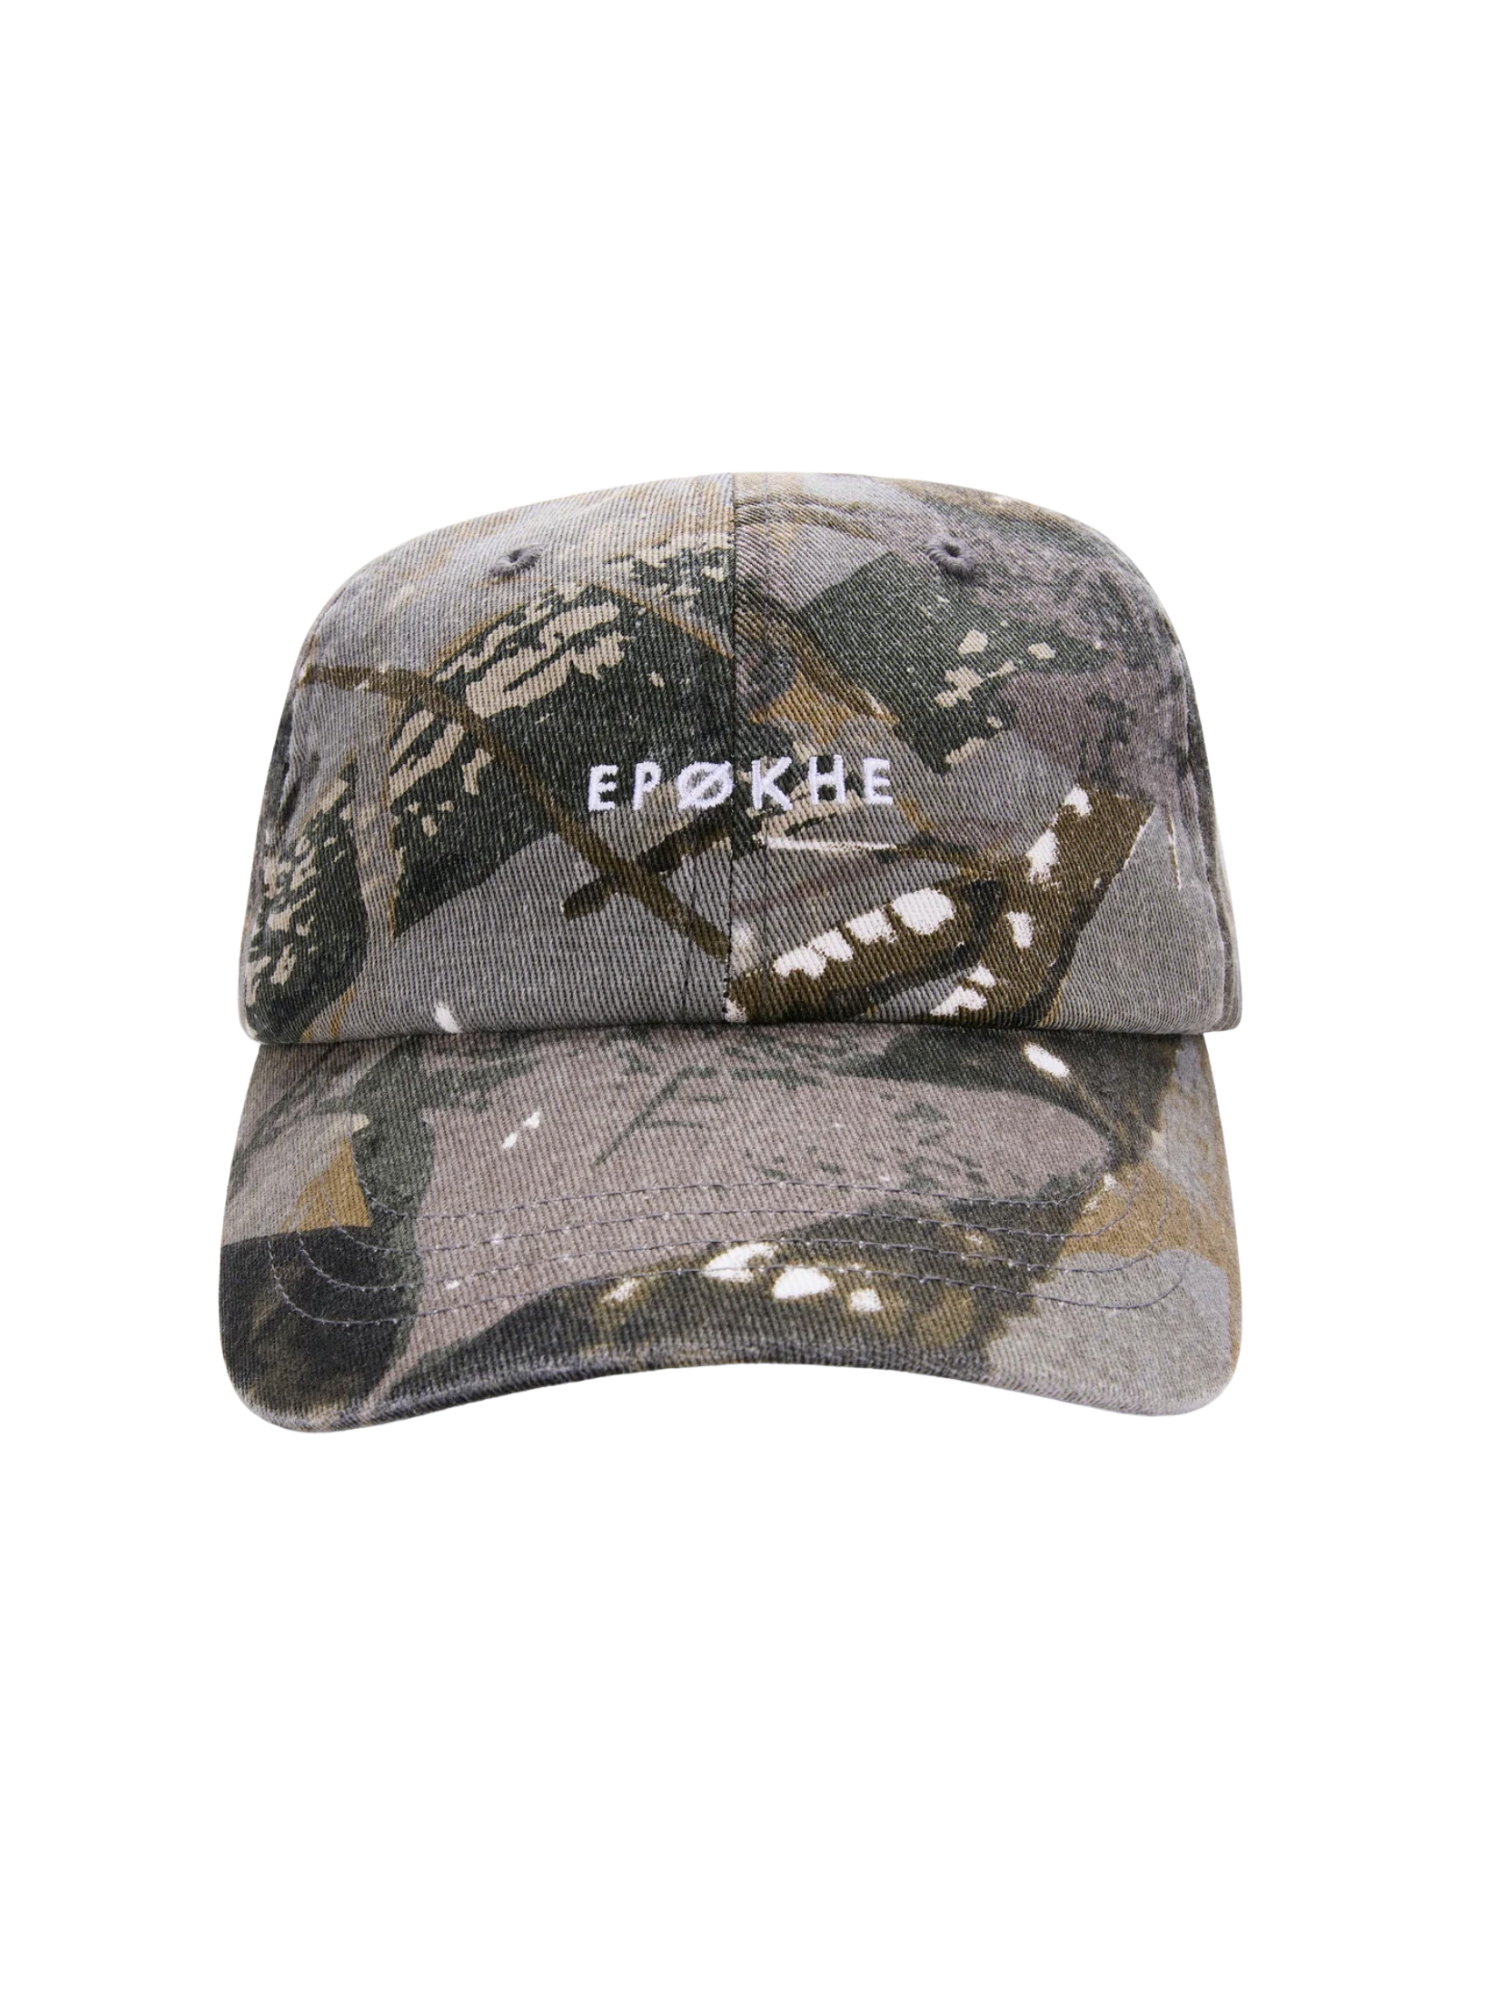 Epokhe Logo Hat - Camo